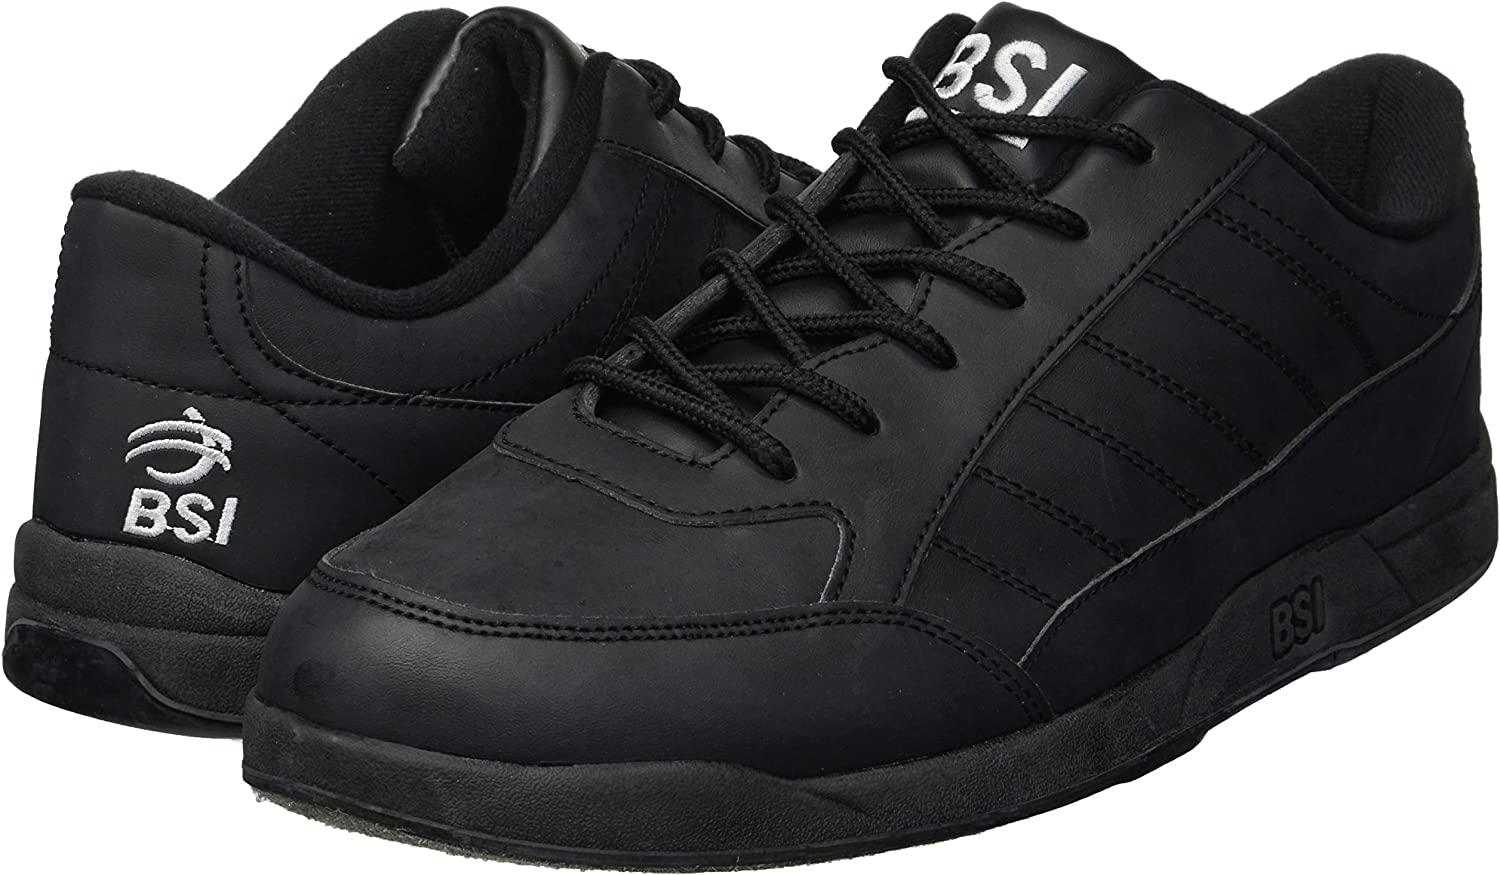 BSI Men's Basic #521 Bowling Shoes 10.5 Black